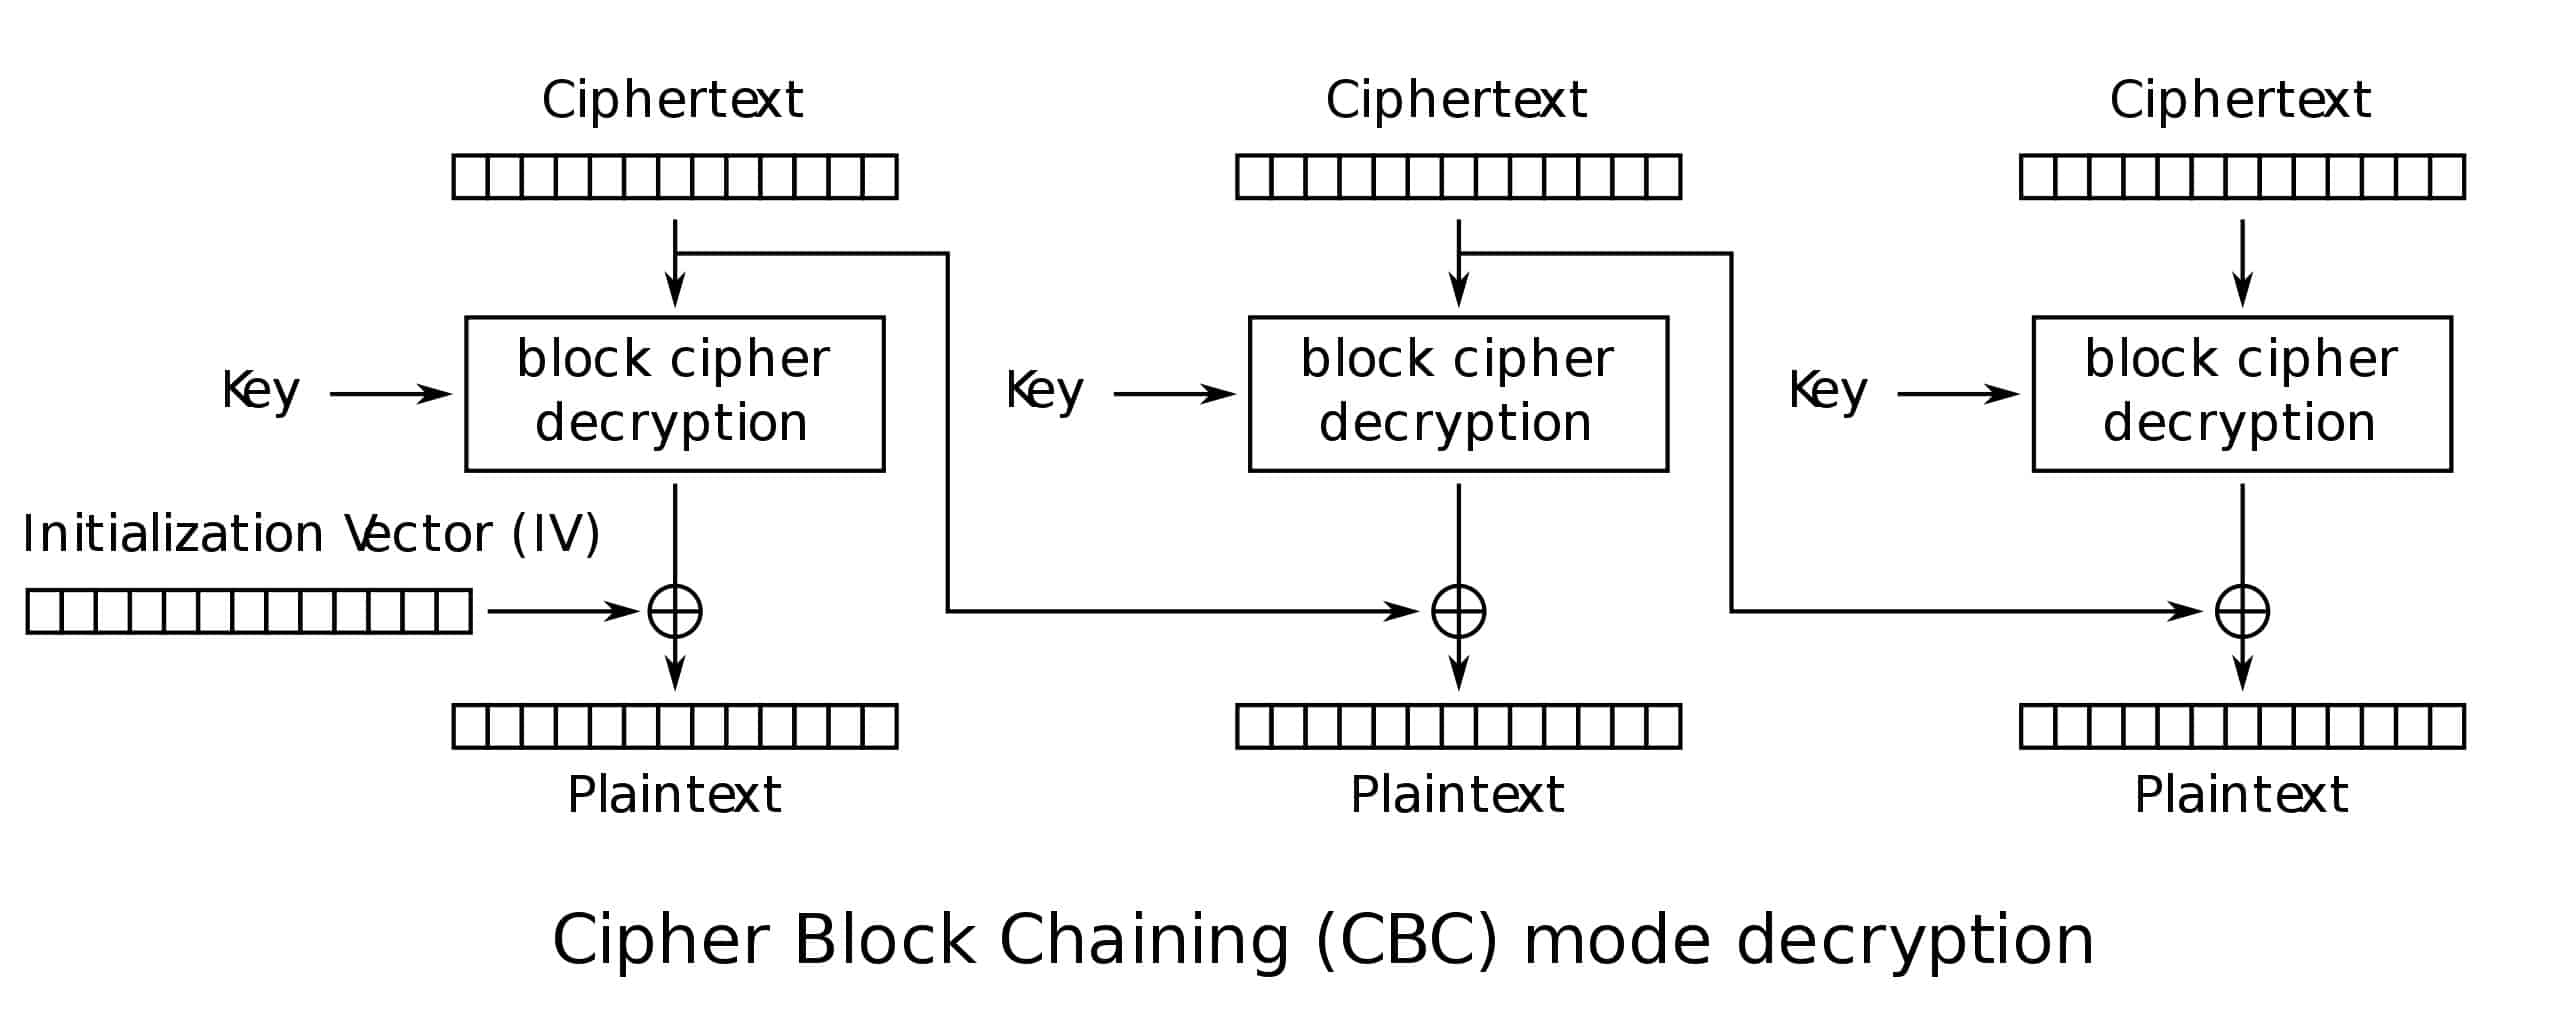 fernet-cbc-mode-decryption